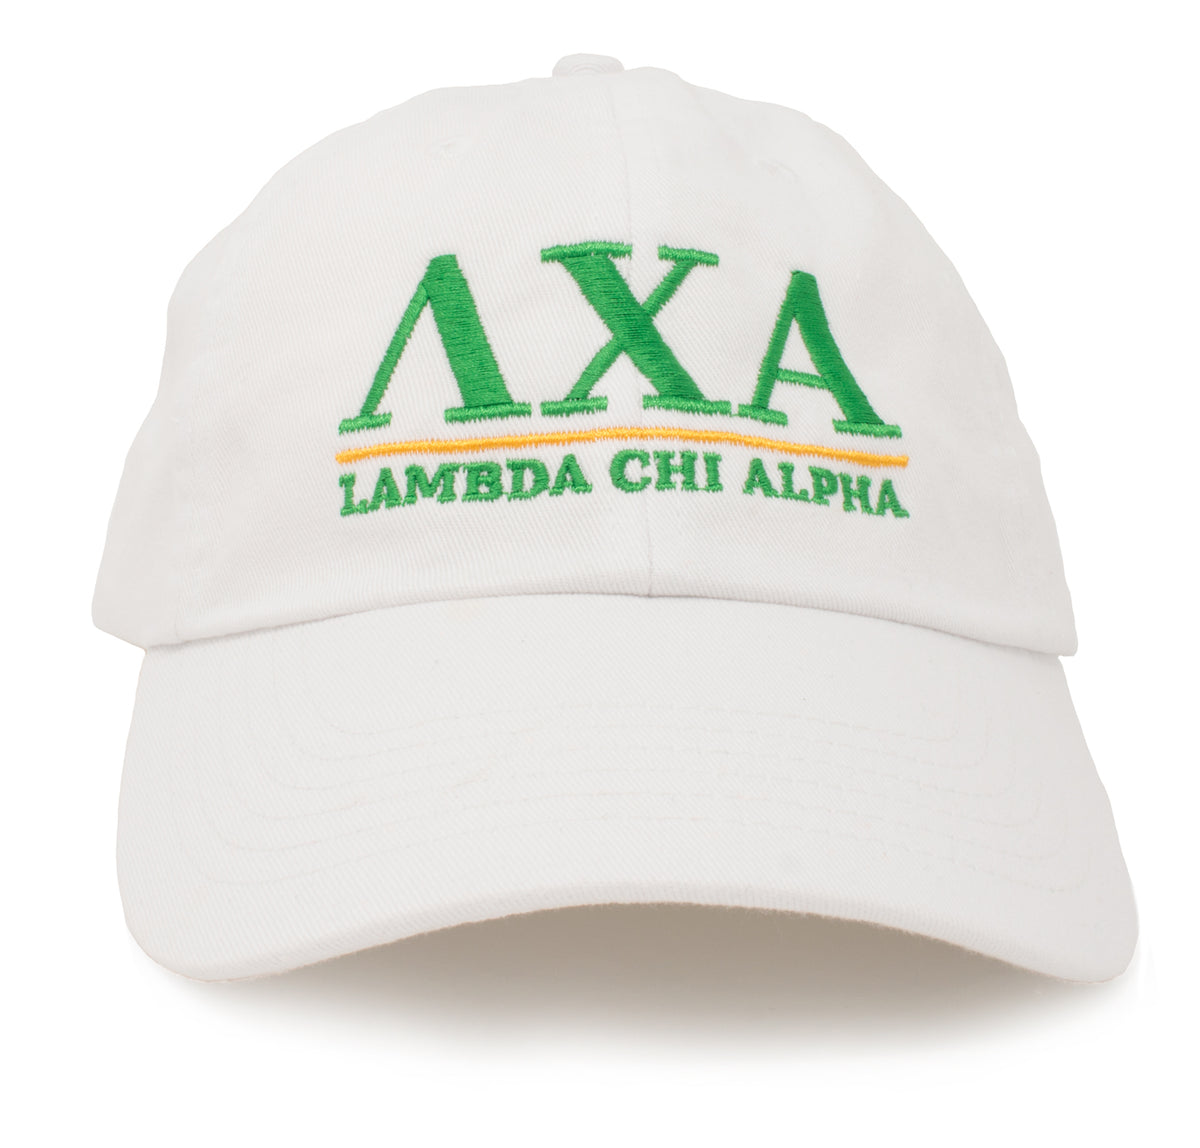 Lambda Chi Alpha| Classic Fraternity Collegiate LCA Baseball Rush Frat Hat Cap